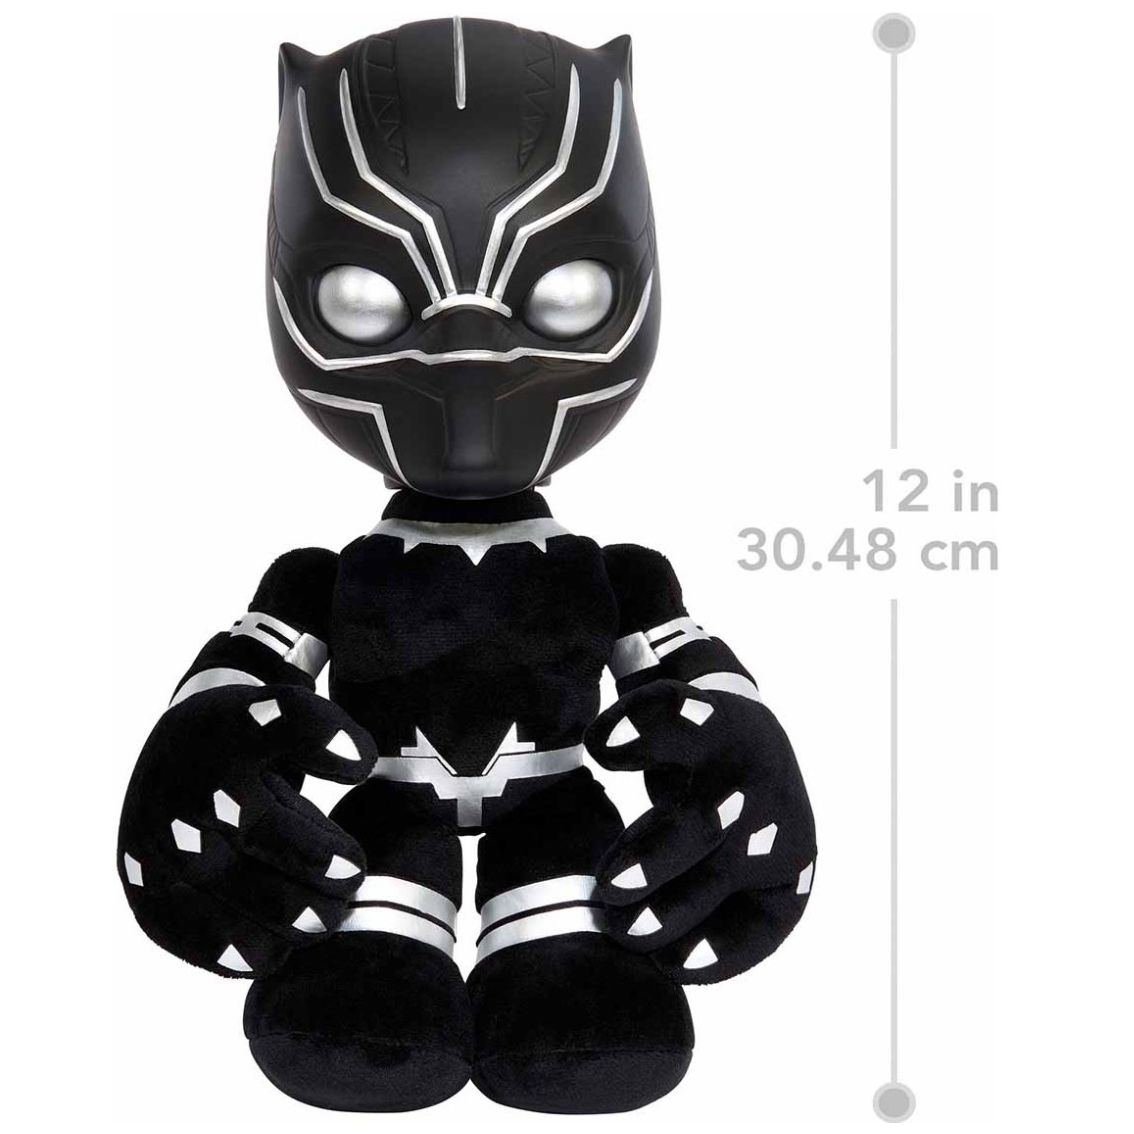 Peluche Black Panther con Sonidos Marvel